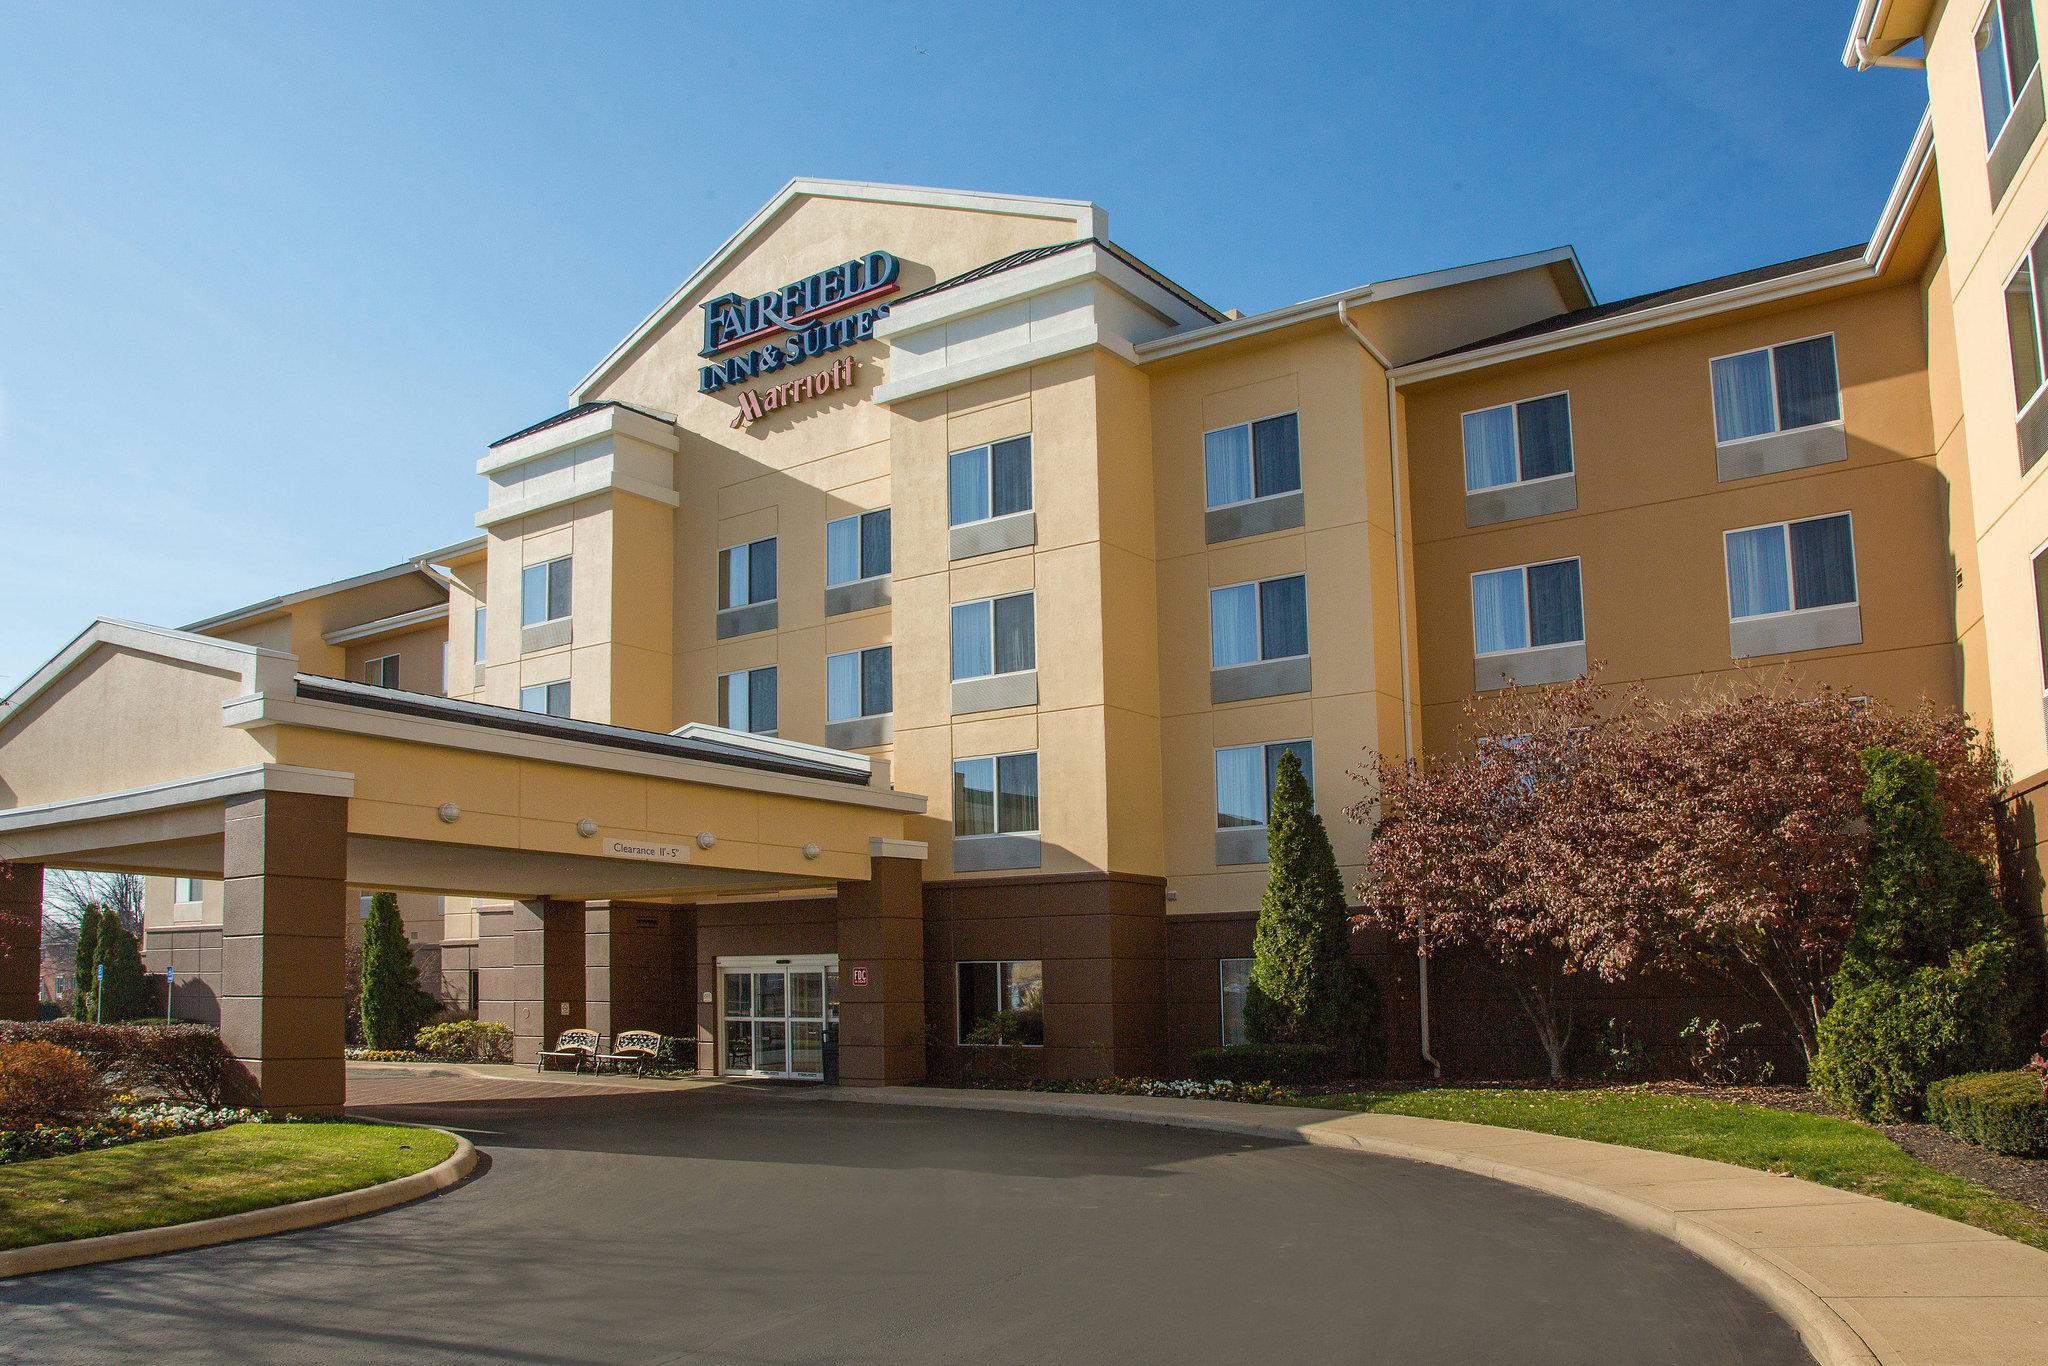 Fairfield Inn & Suites by Marriott Columbus OSU image